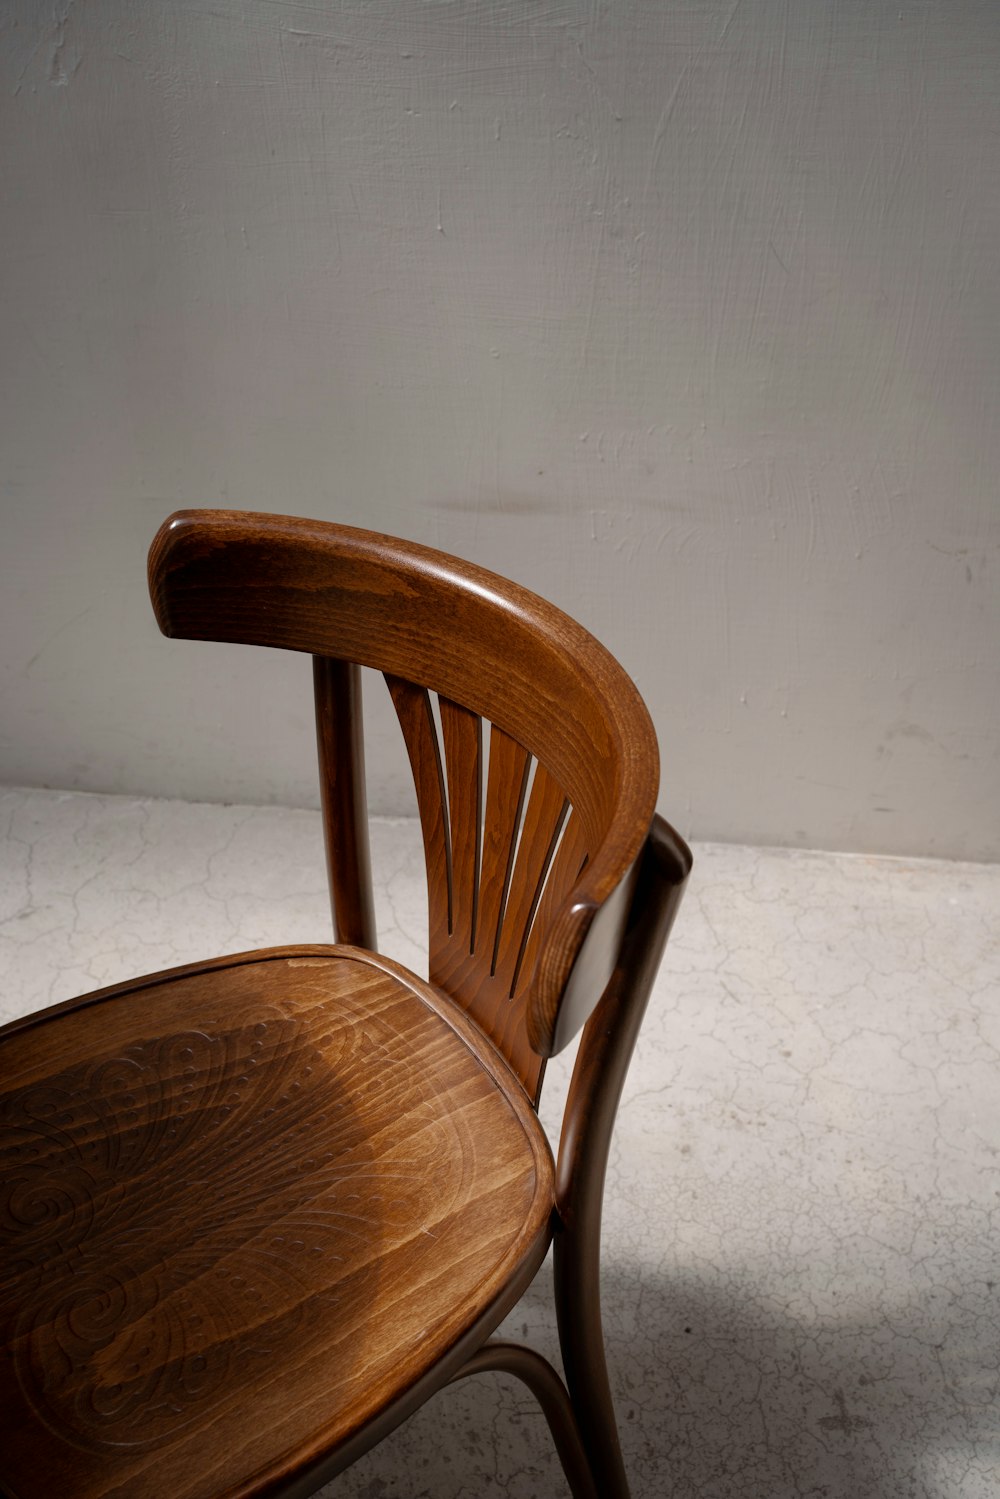 brown wooden chair near white wall